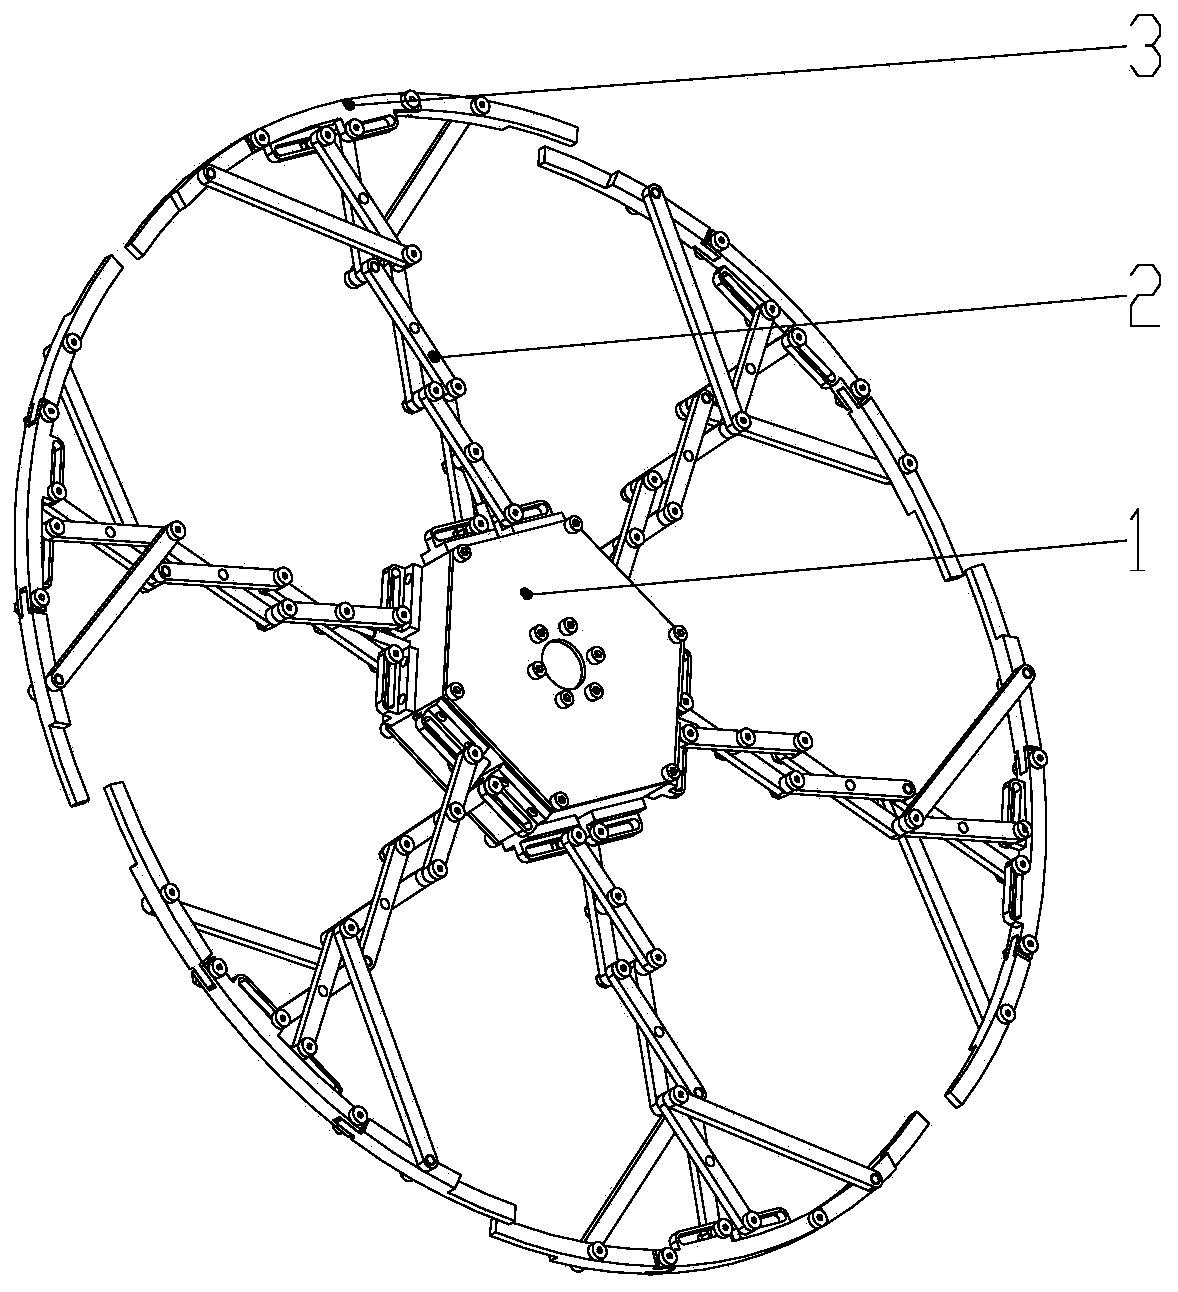 Telescopic deformation wheel device